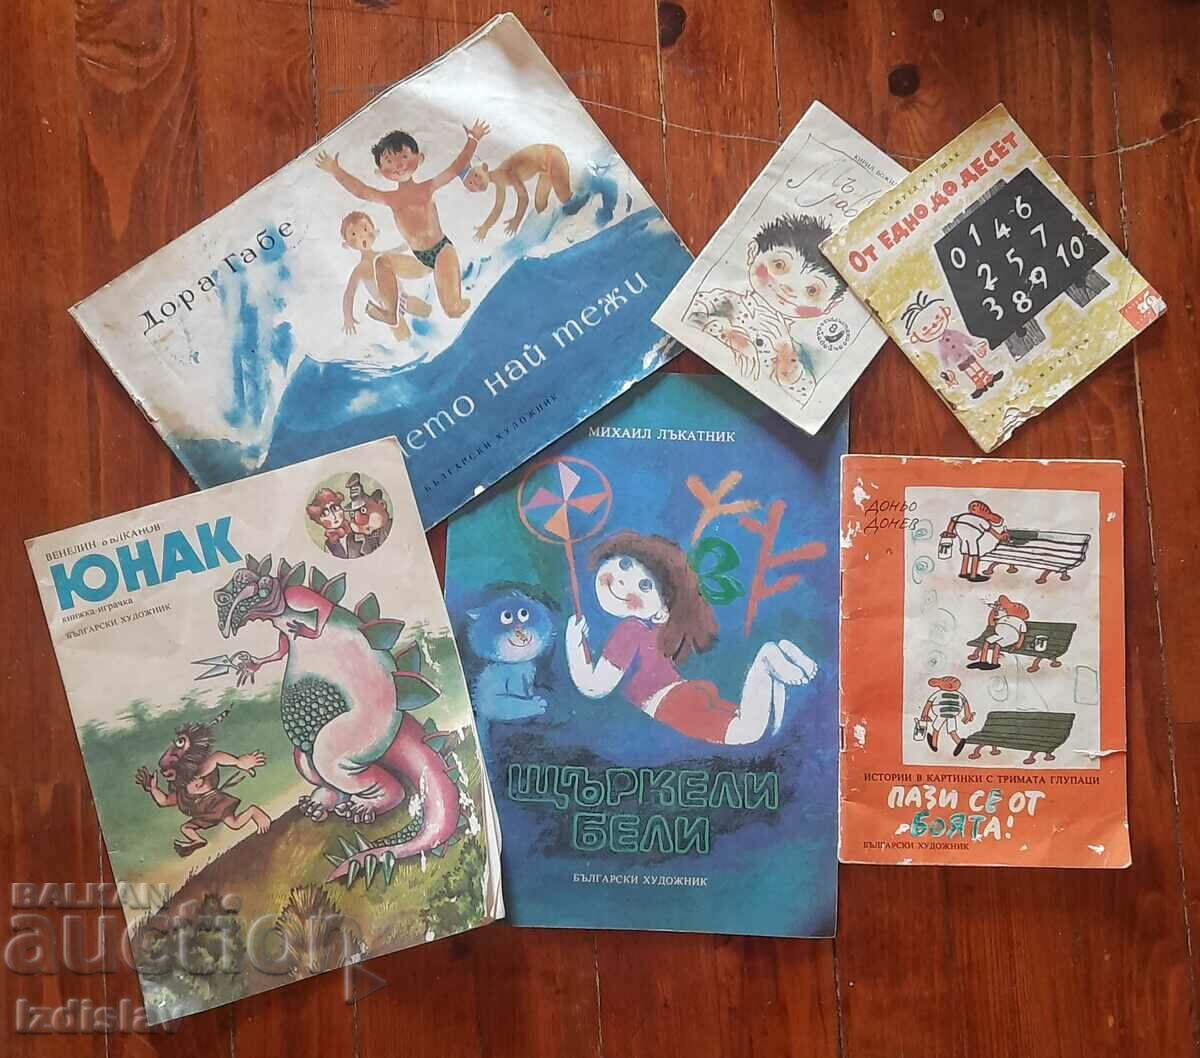 Illustrated children's books